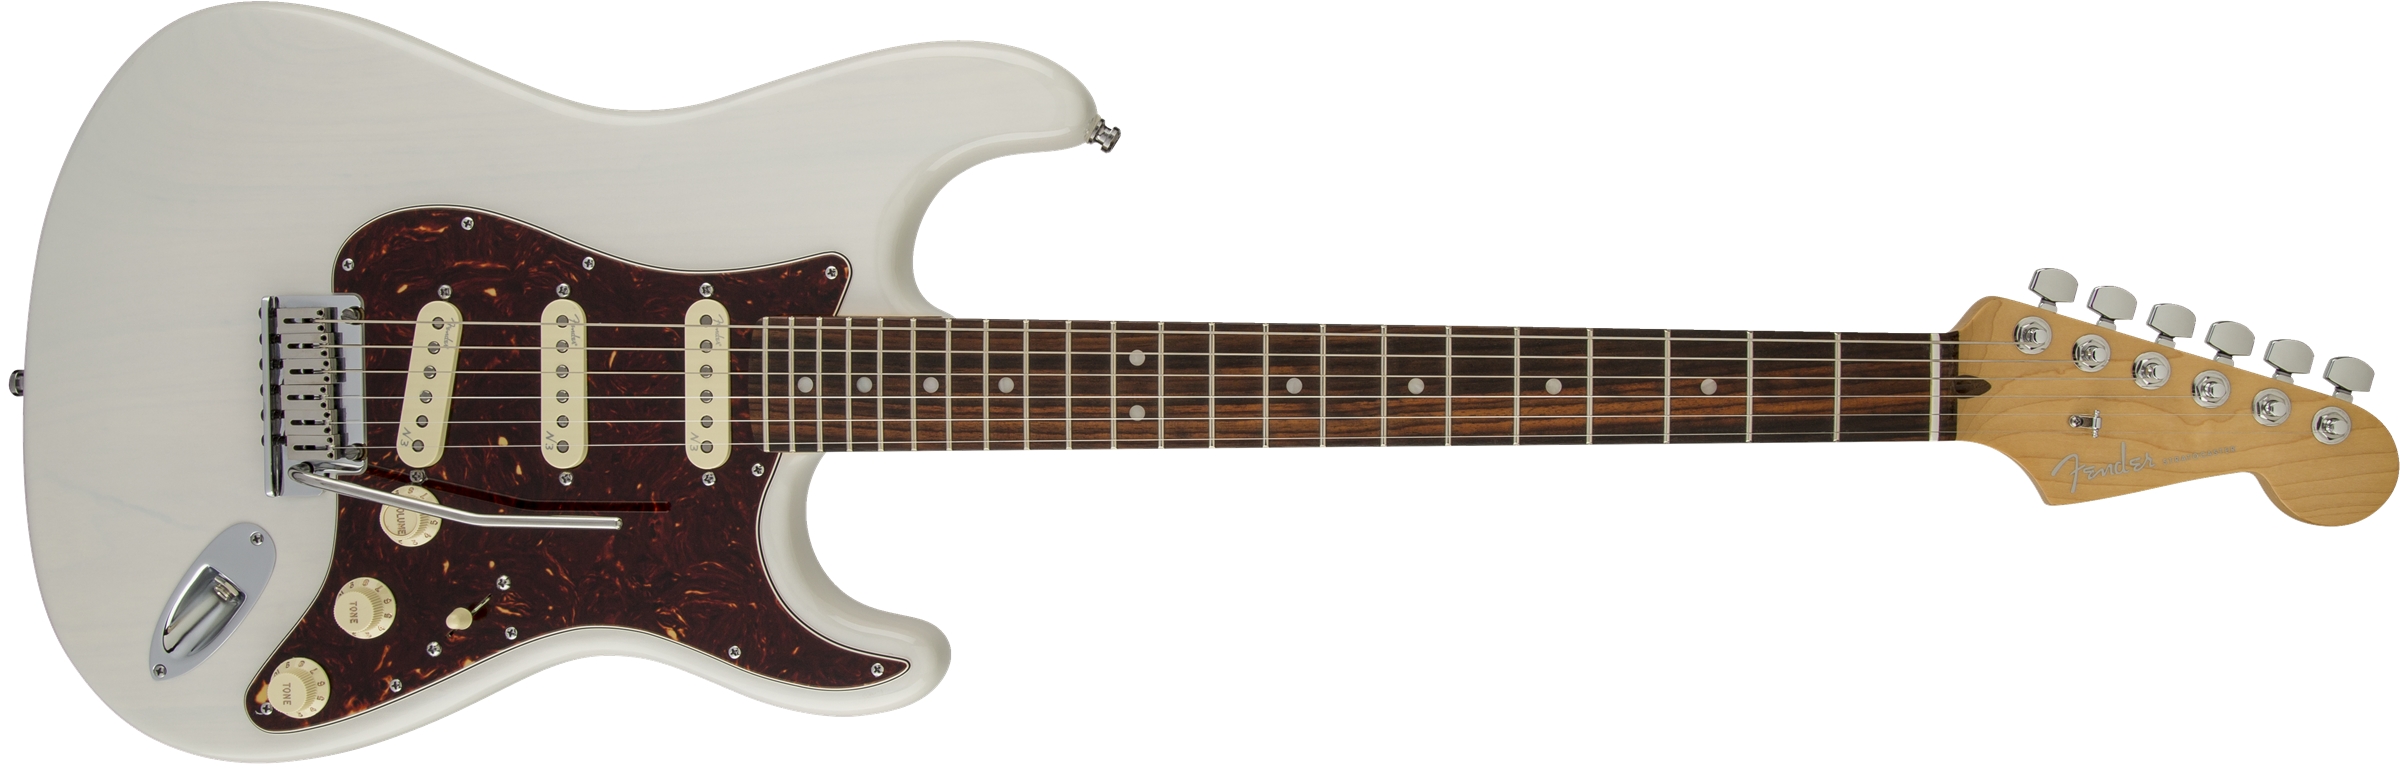 American Deluxe Stratocaster Ash [2010-2015] Fender - Audiofanzine